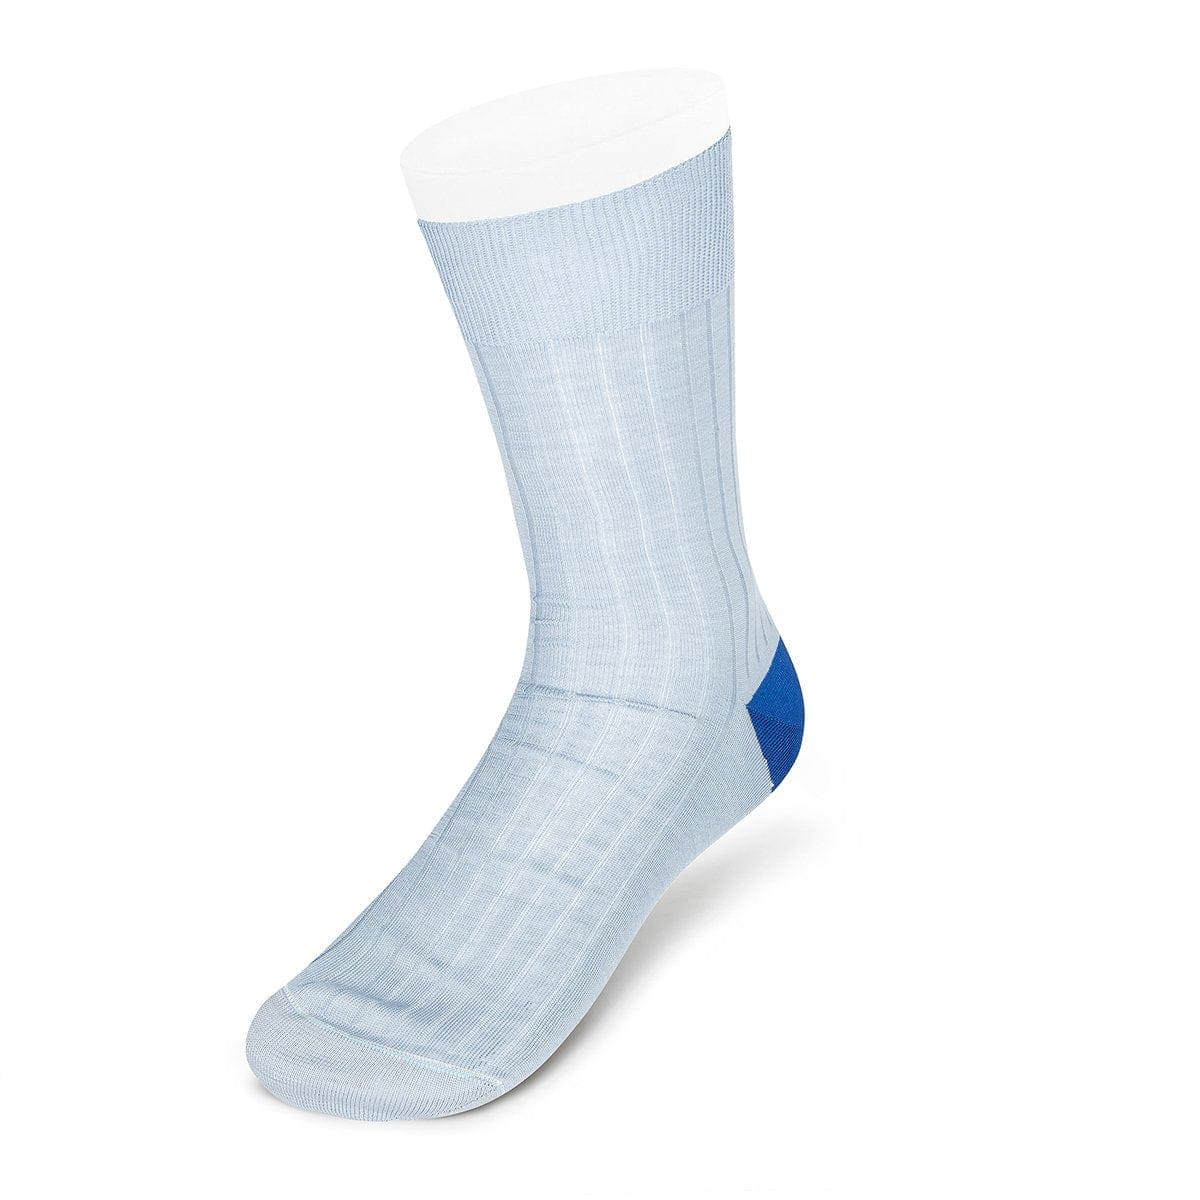 Pale Blue Cotton Socks with Contrast Heel & Toe